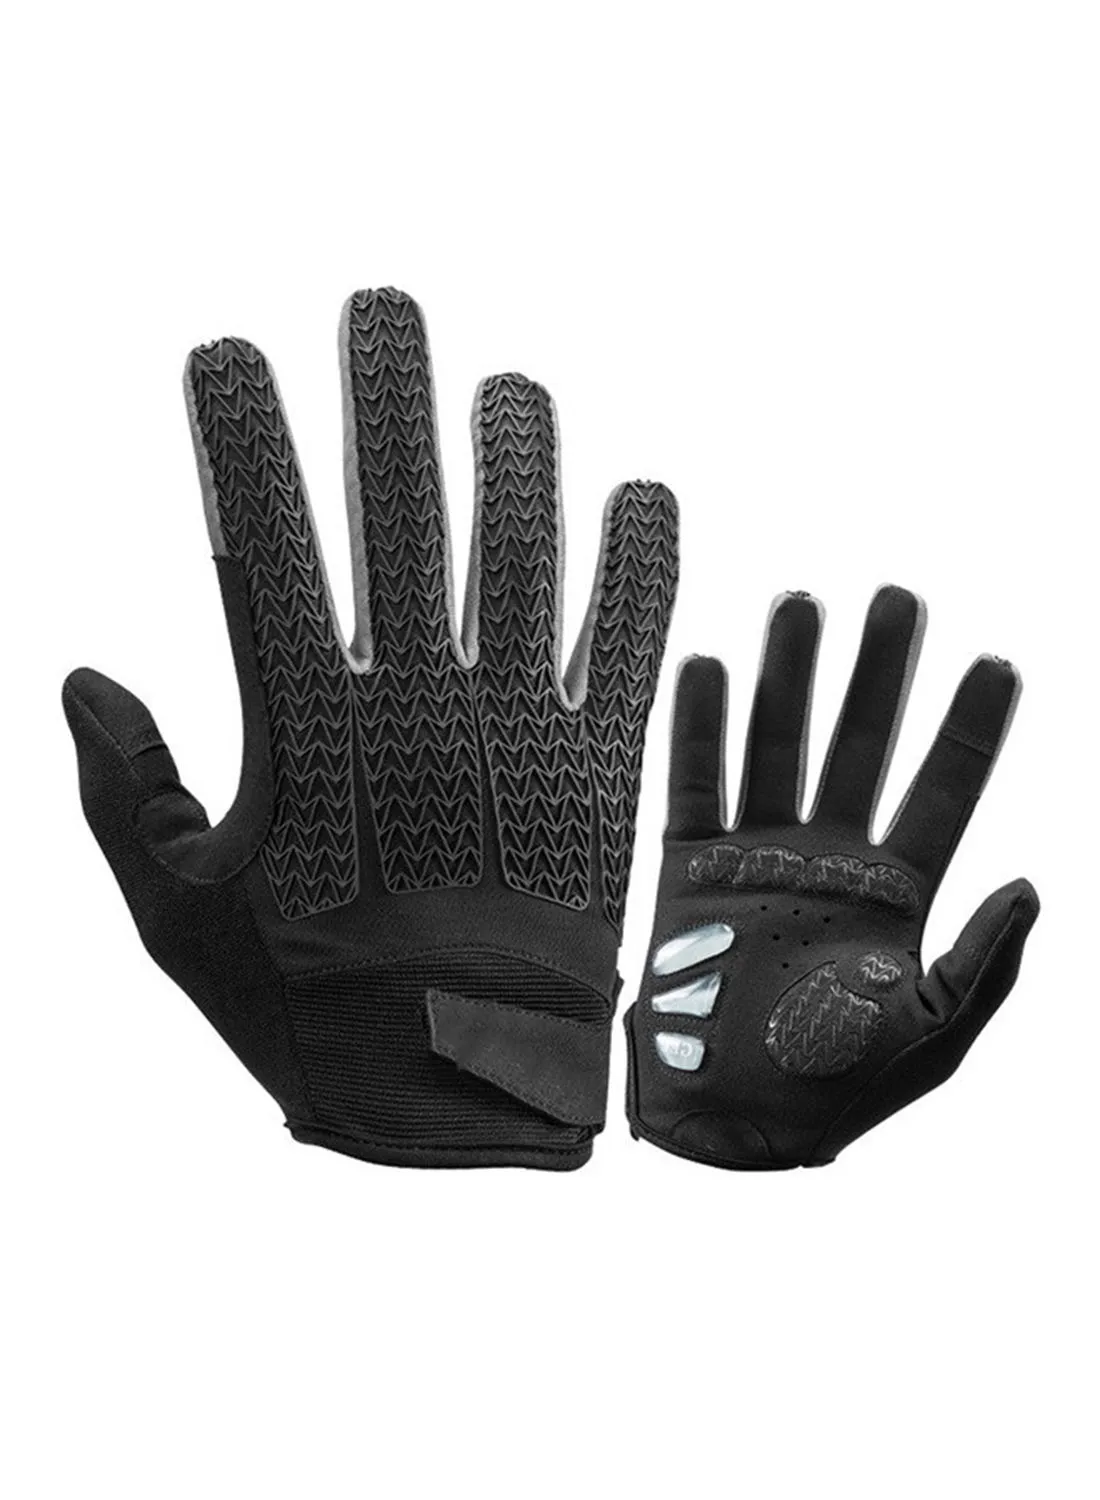 Athletiq Bicycle Gloves 25 x 12 x 4cm